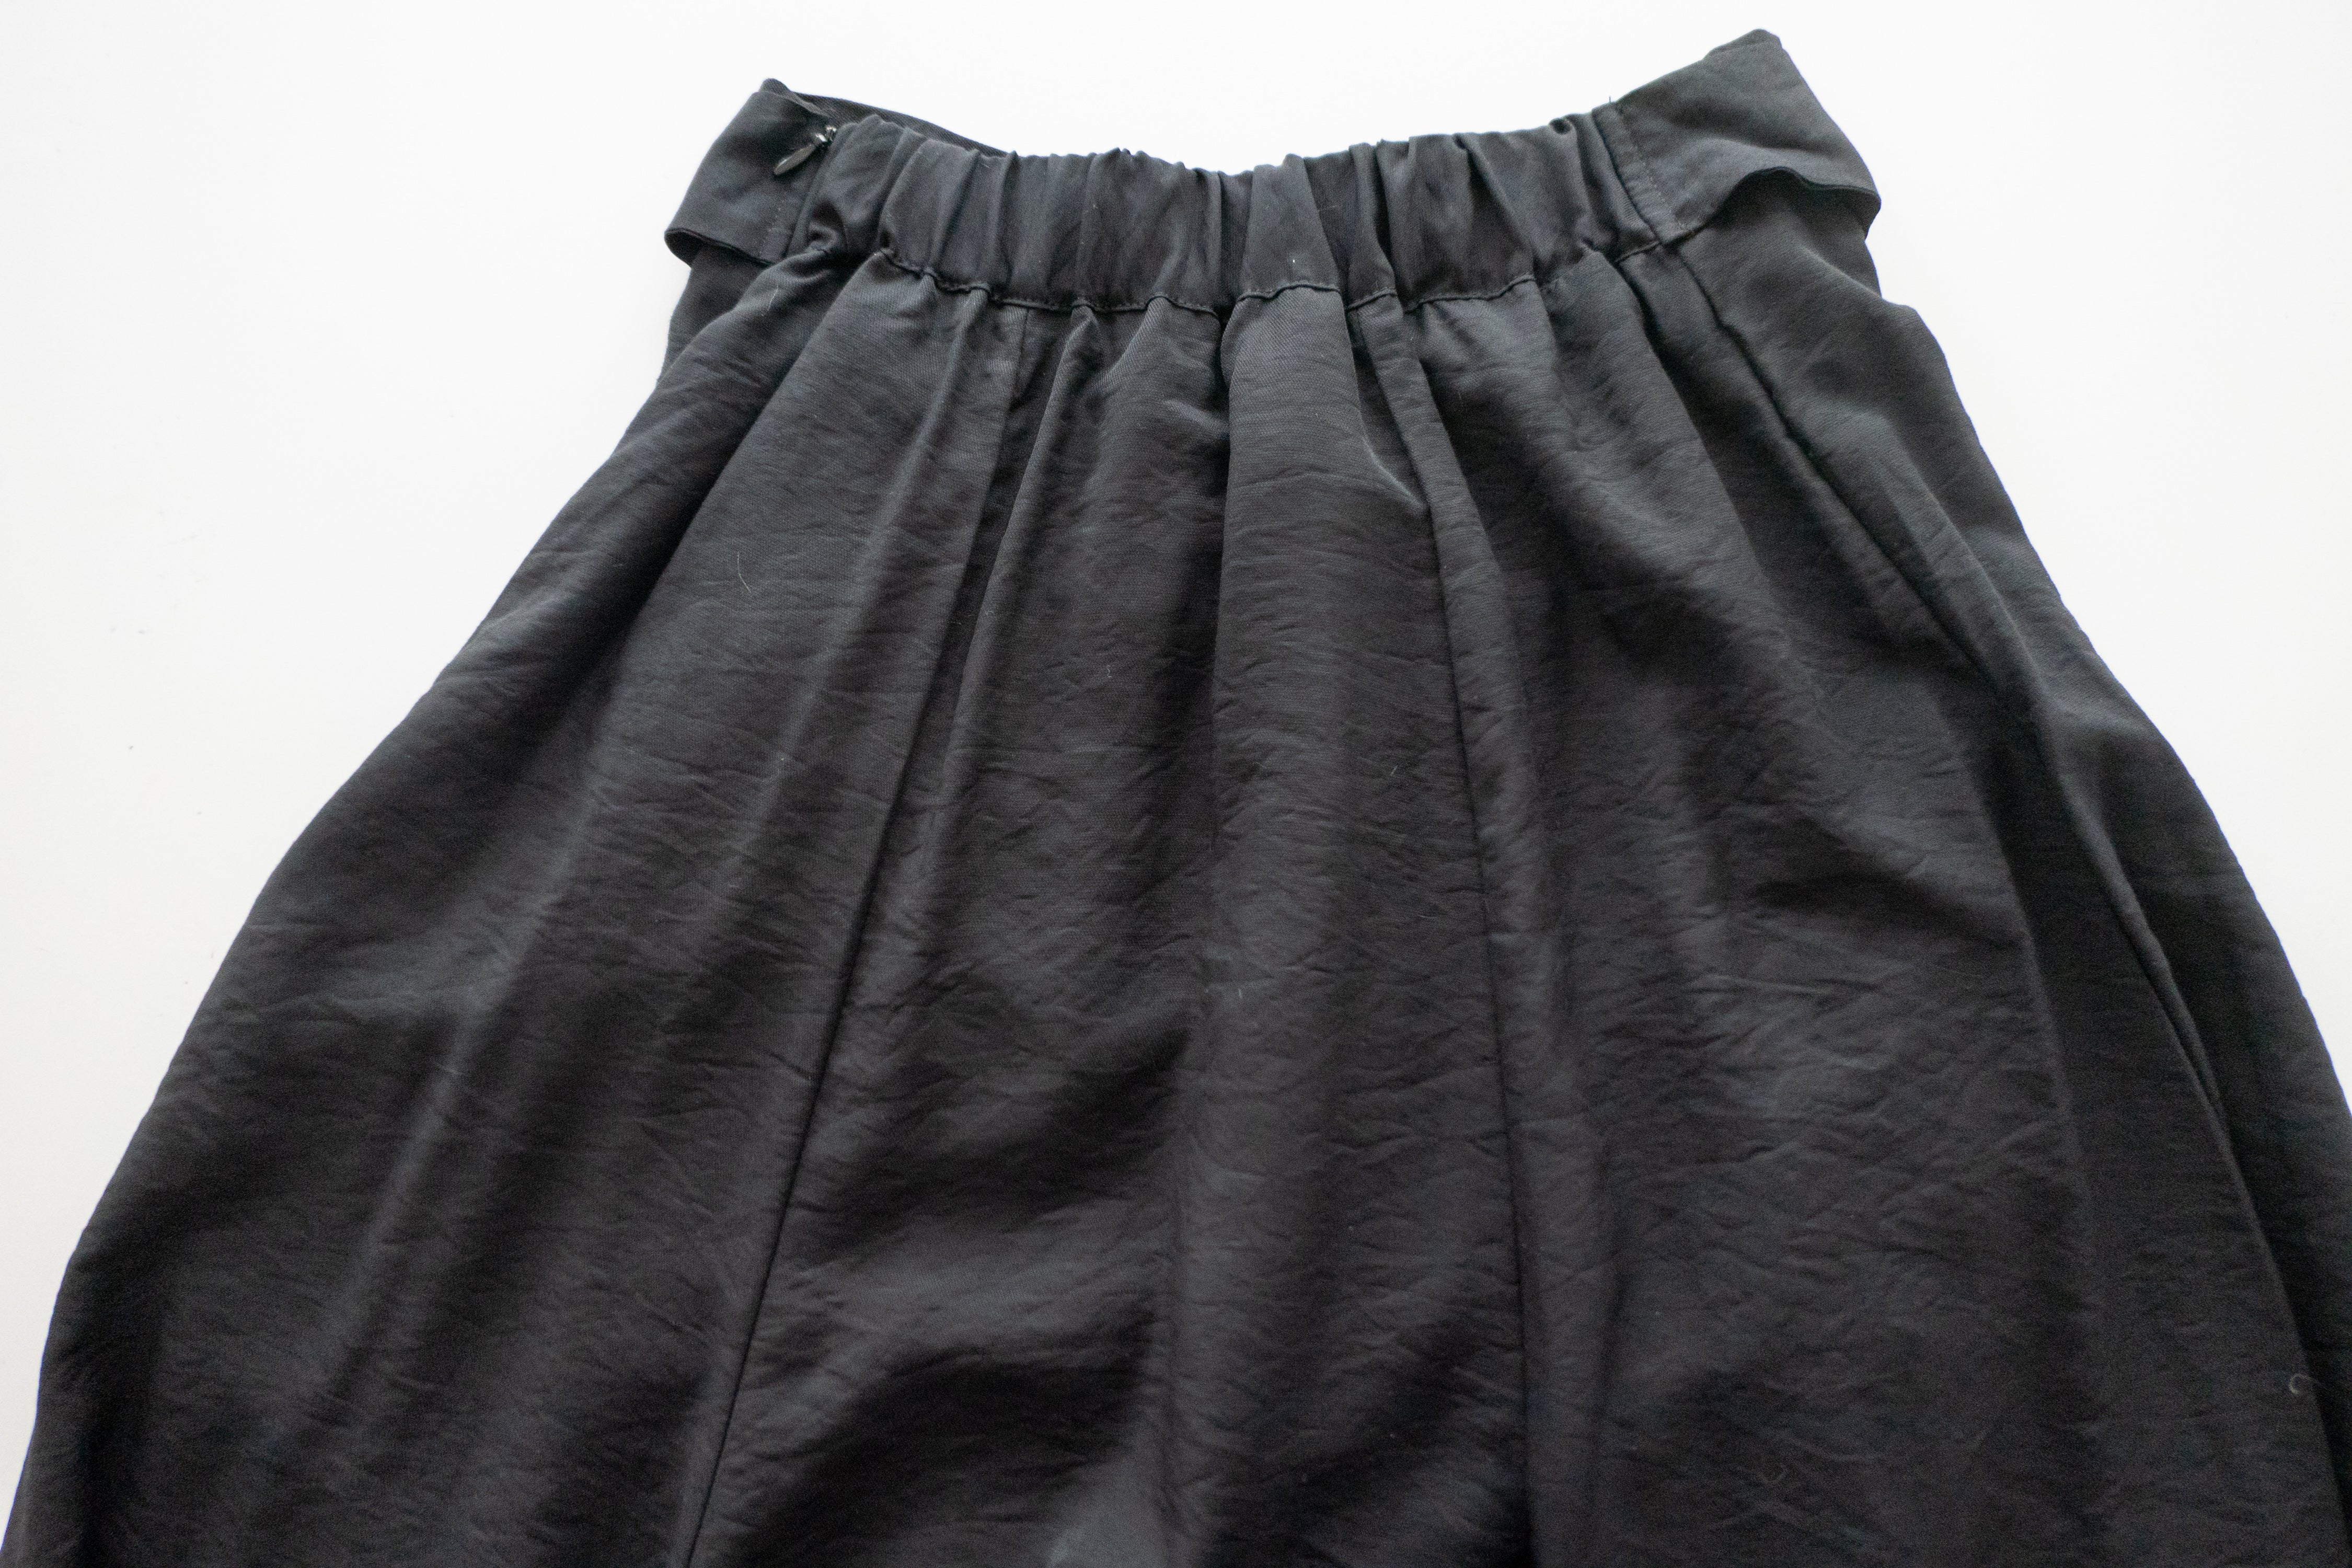 Flair 微皺百搭綁帶車拼浪漫飄逸傘裙, skirt/ SK8706 (black sold out)